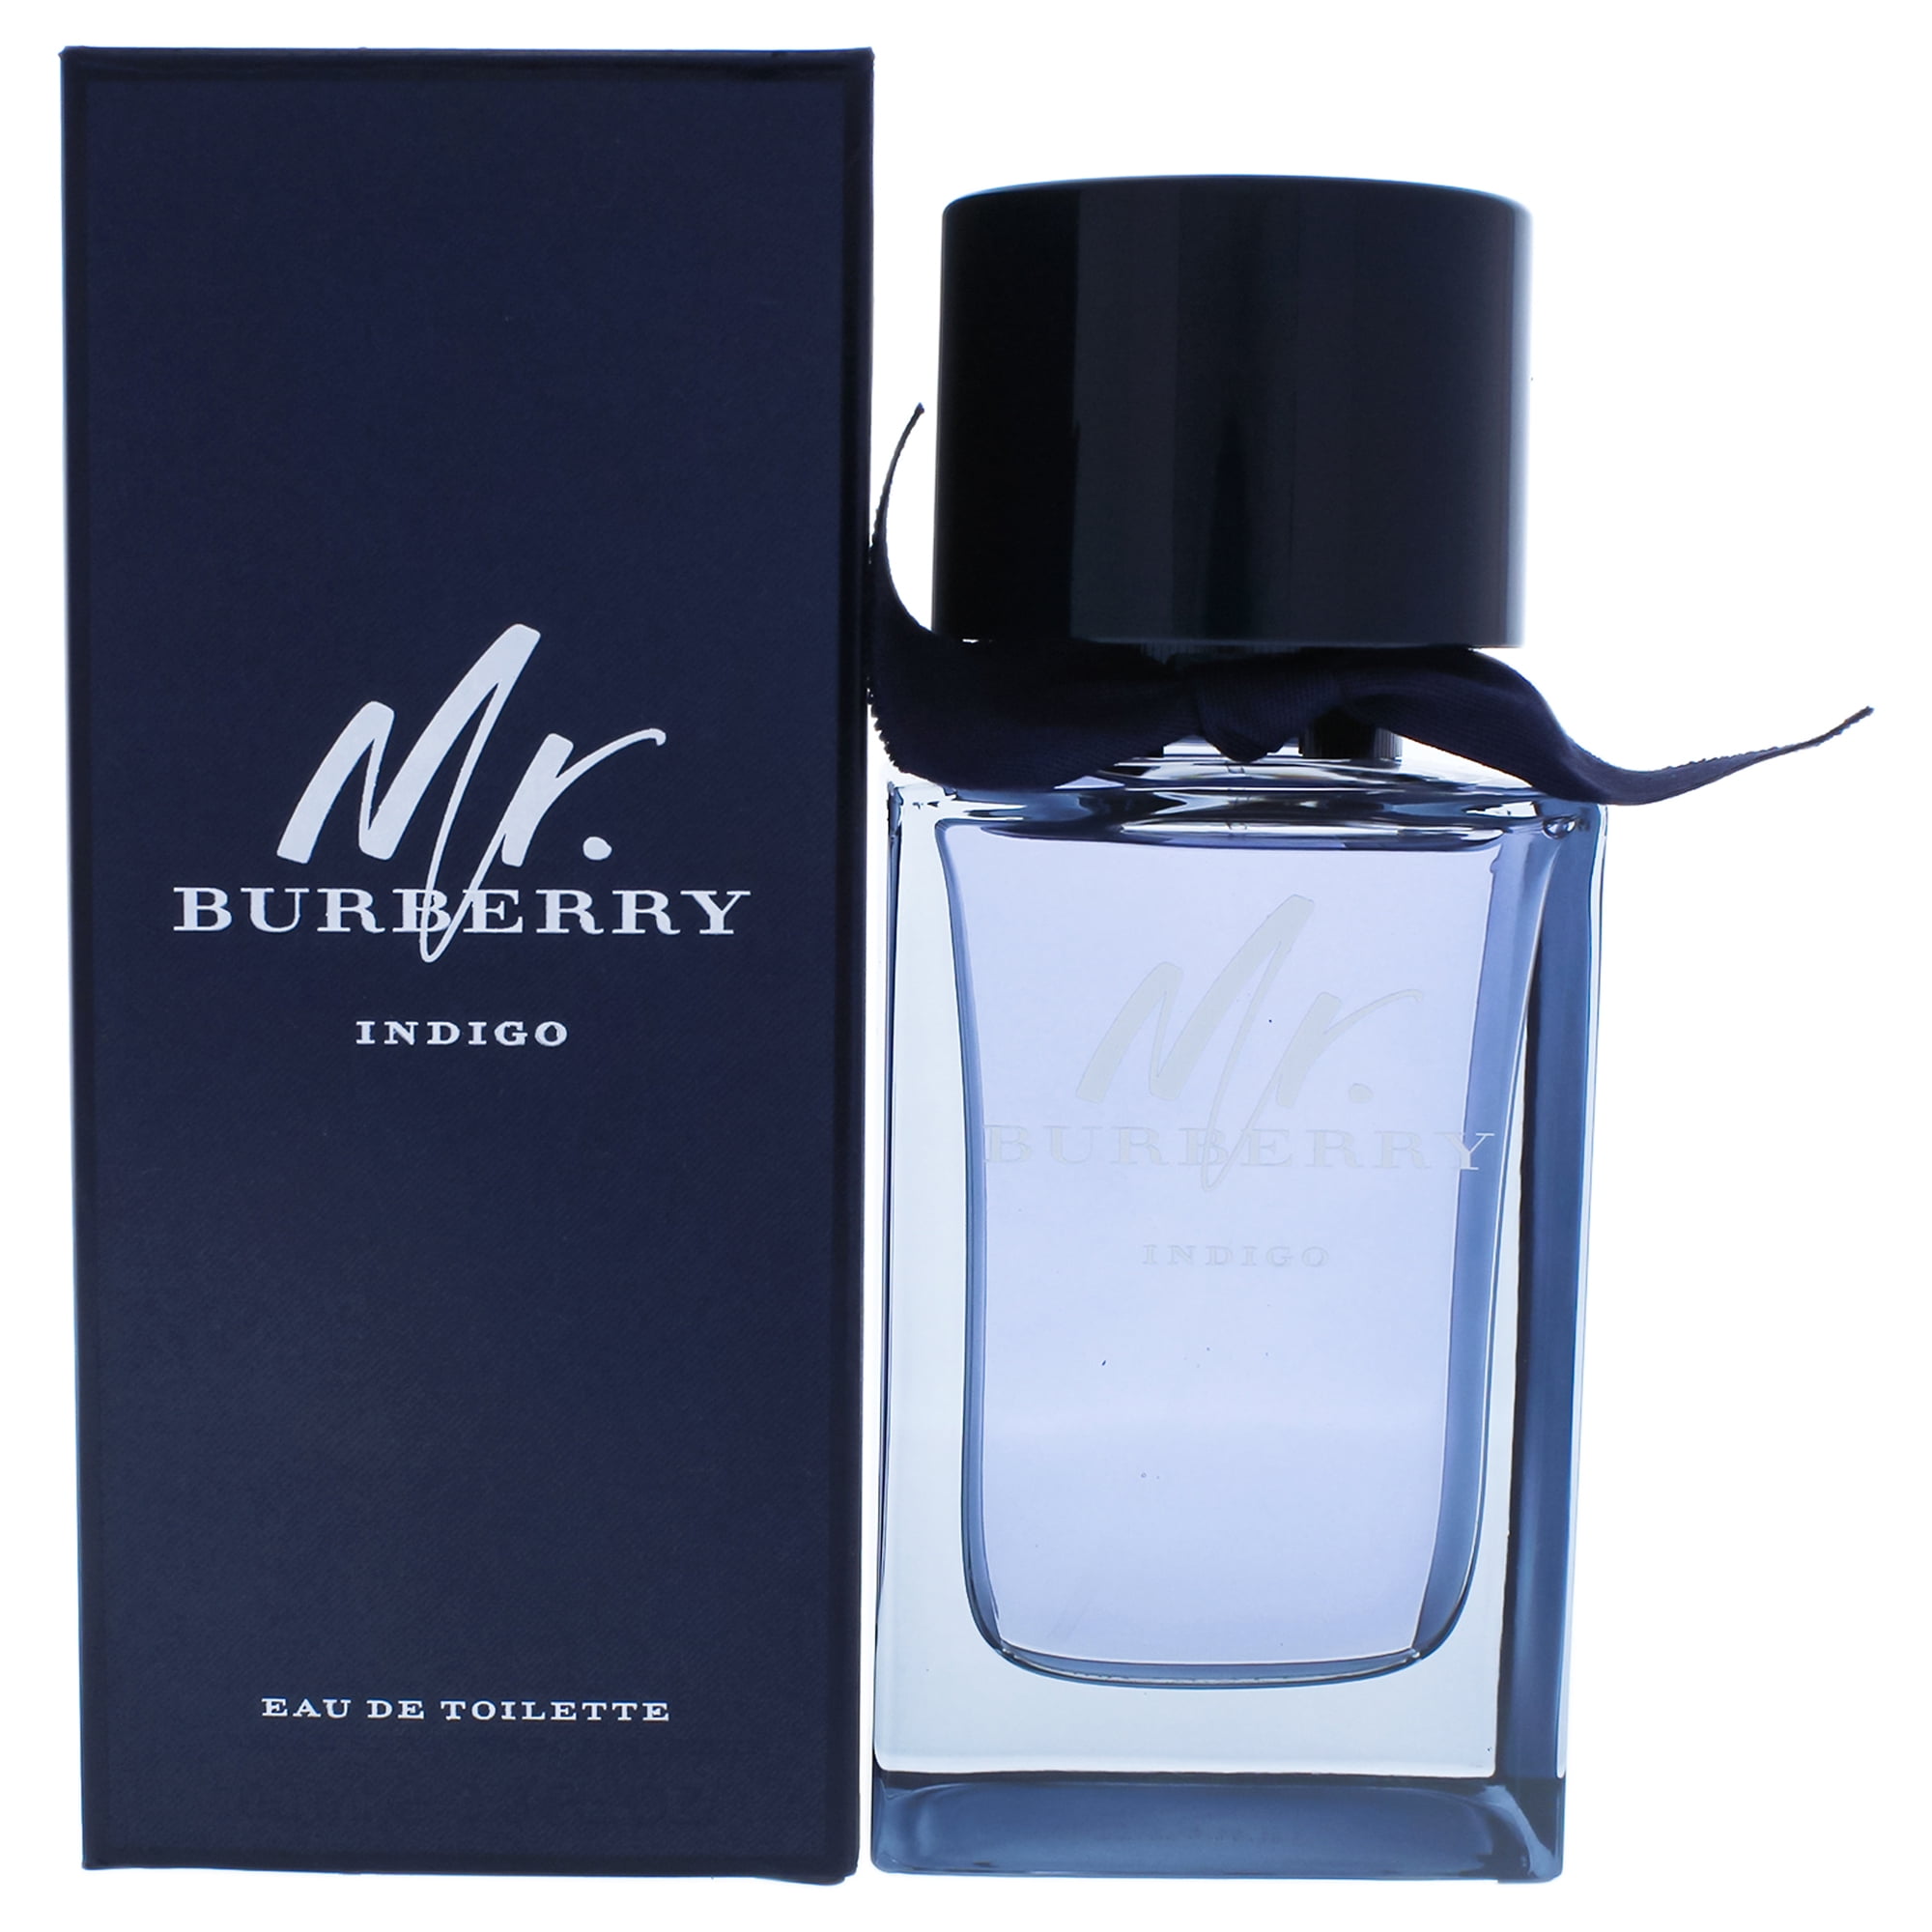 burberry perfume indigo